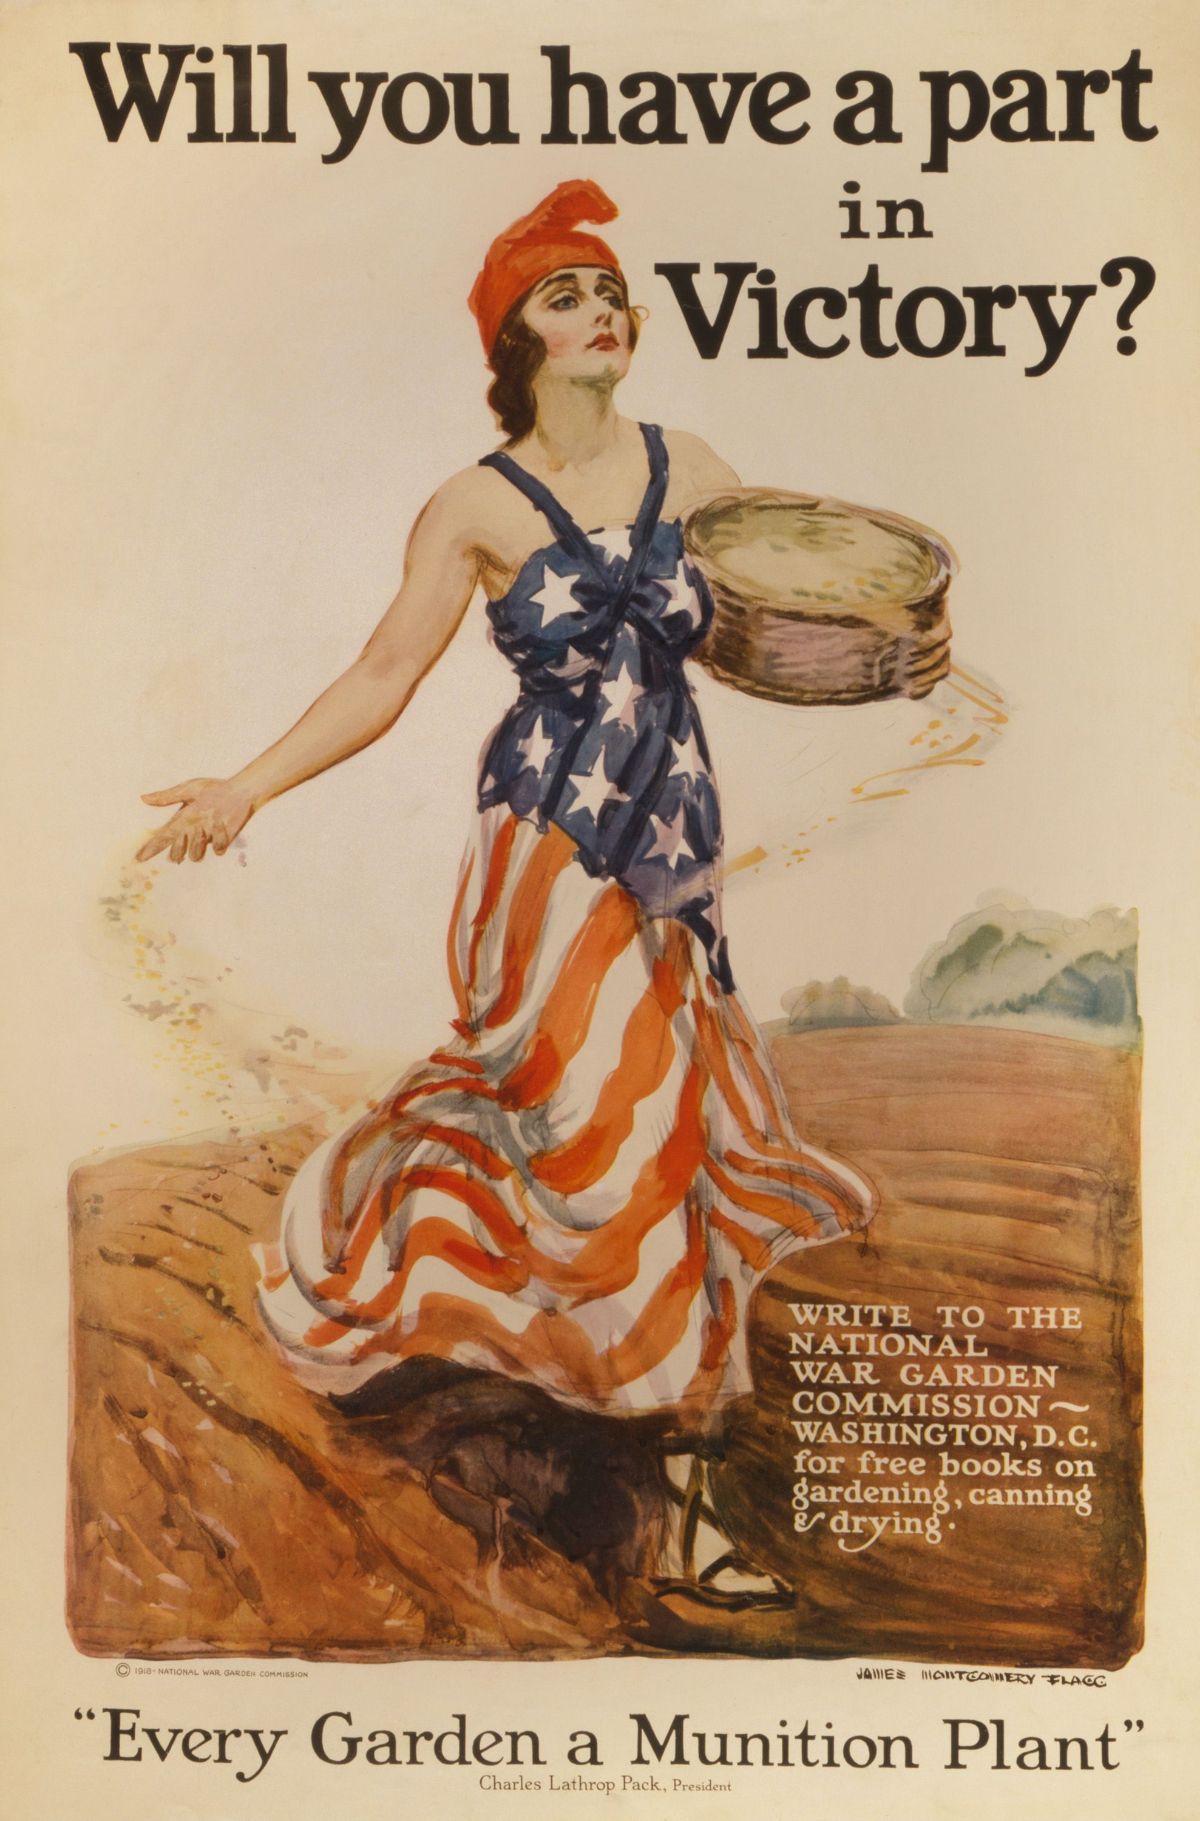 Victory Garden Poster, "Every Garden a Munition Plant"